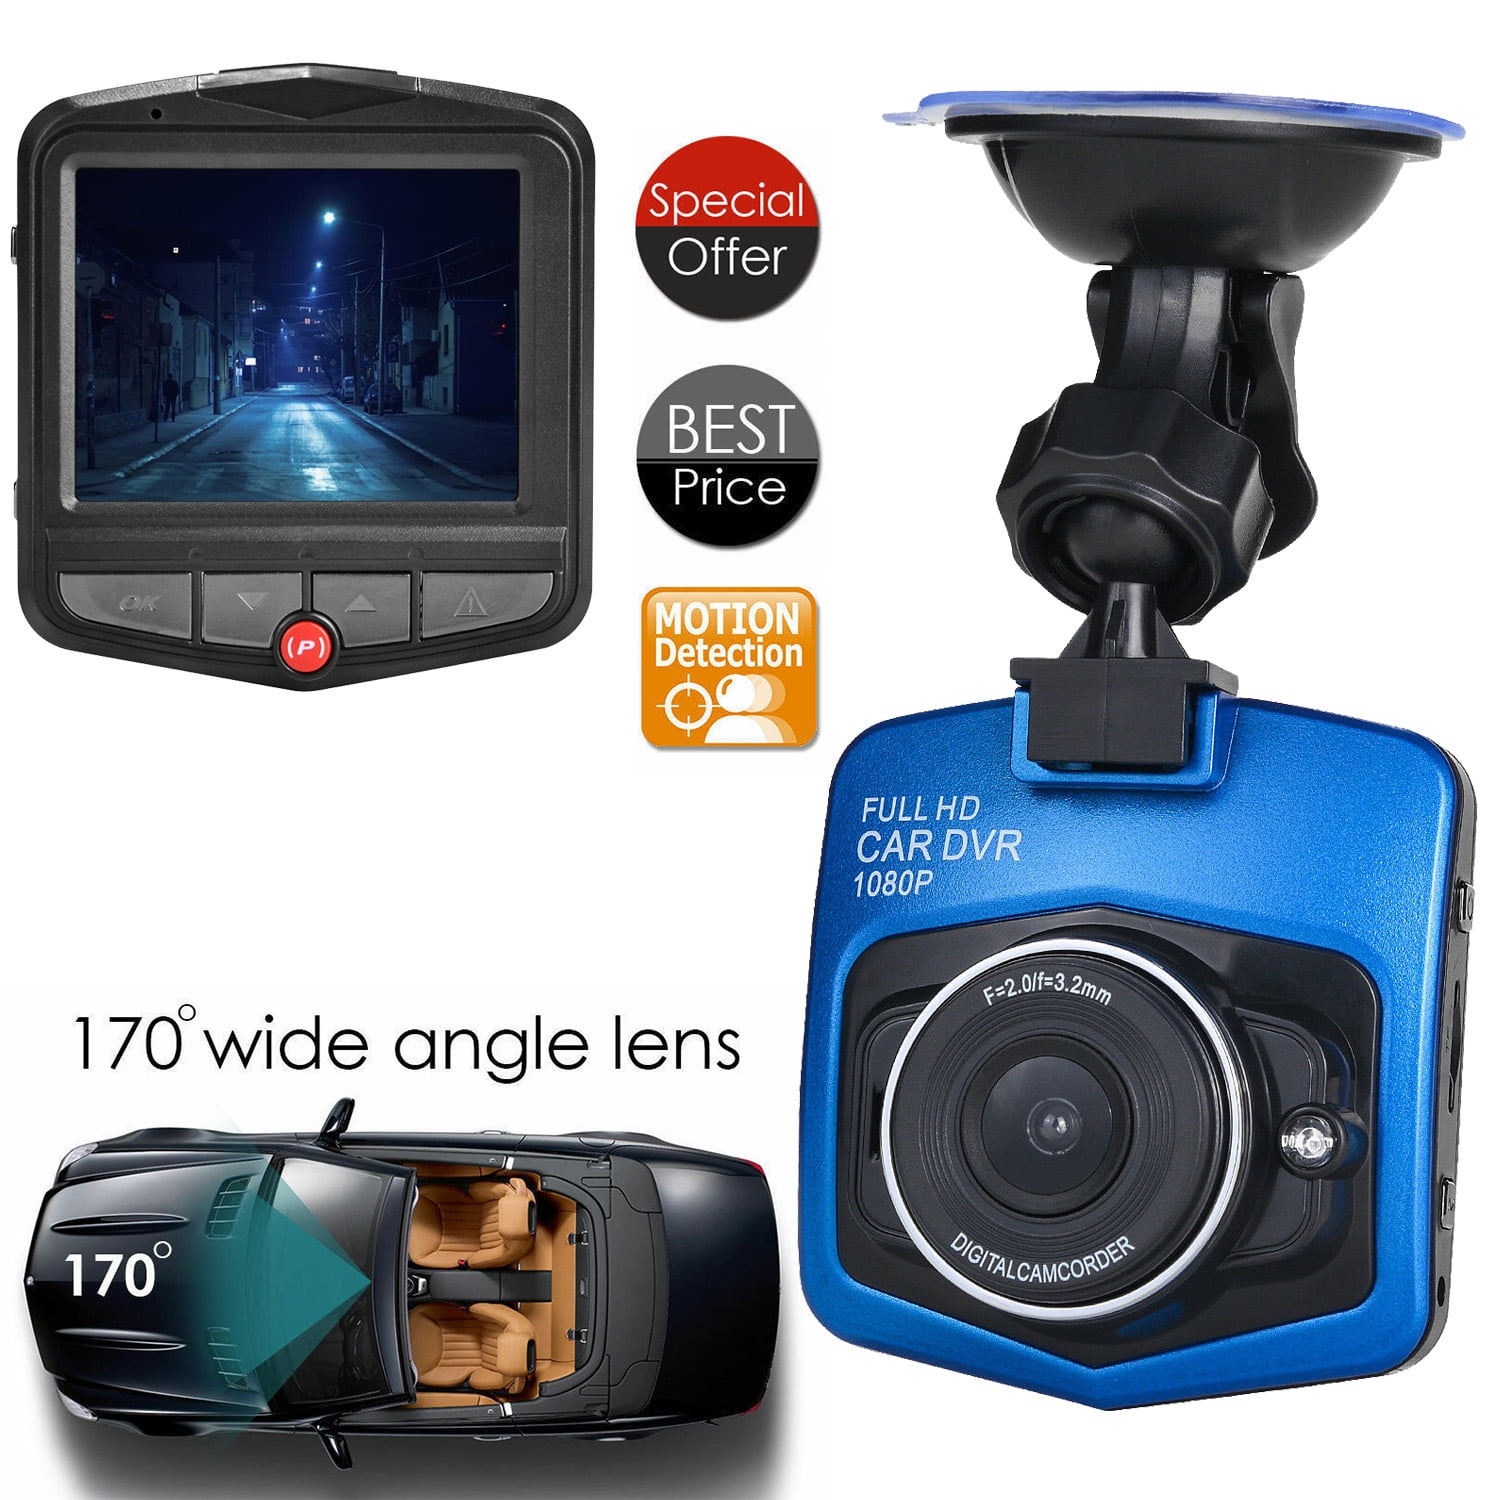 HD 1080P Night Vision Car Video Recorder Camera Vehicle Dash Cam DVR G sensor BK